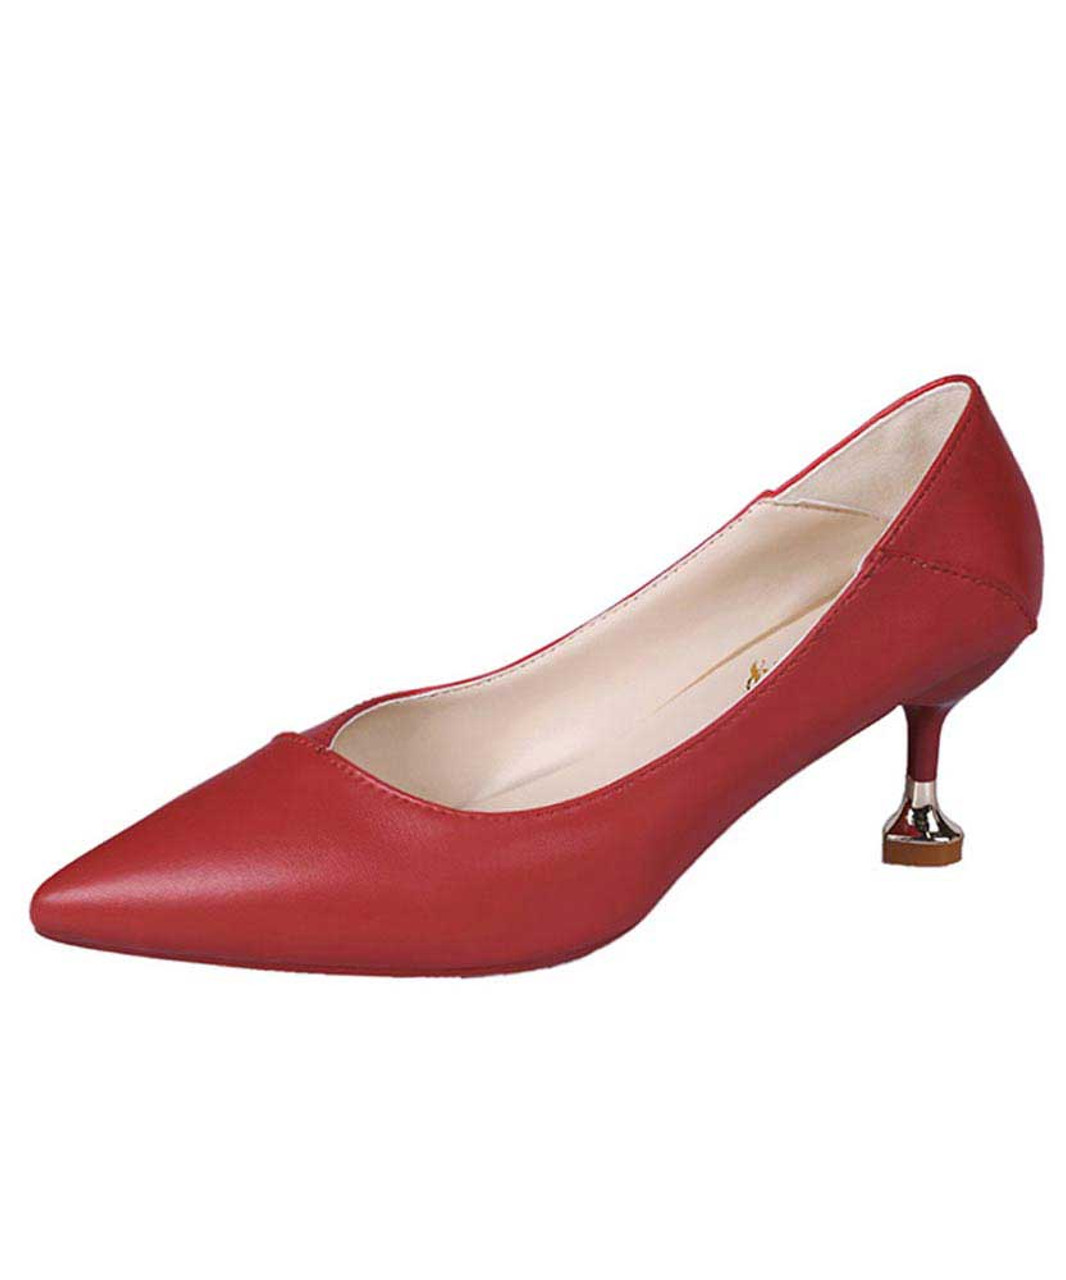 red shoes medium heel